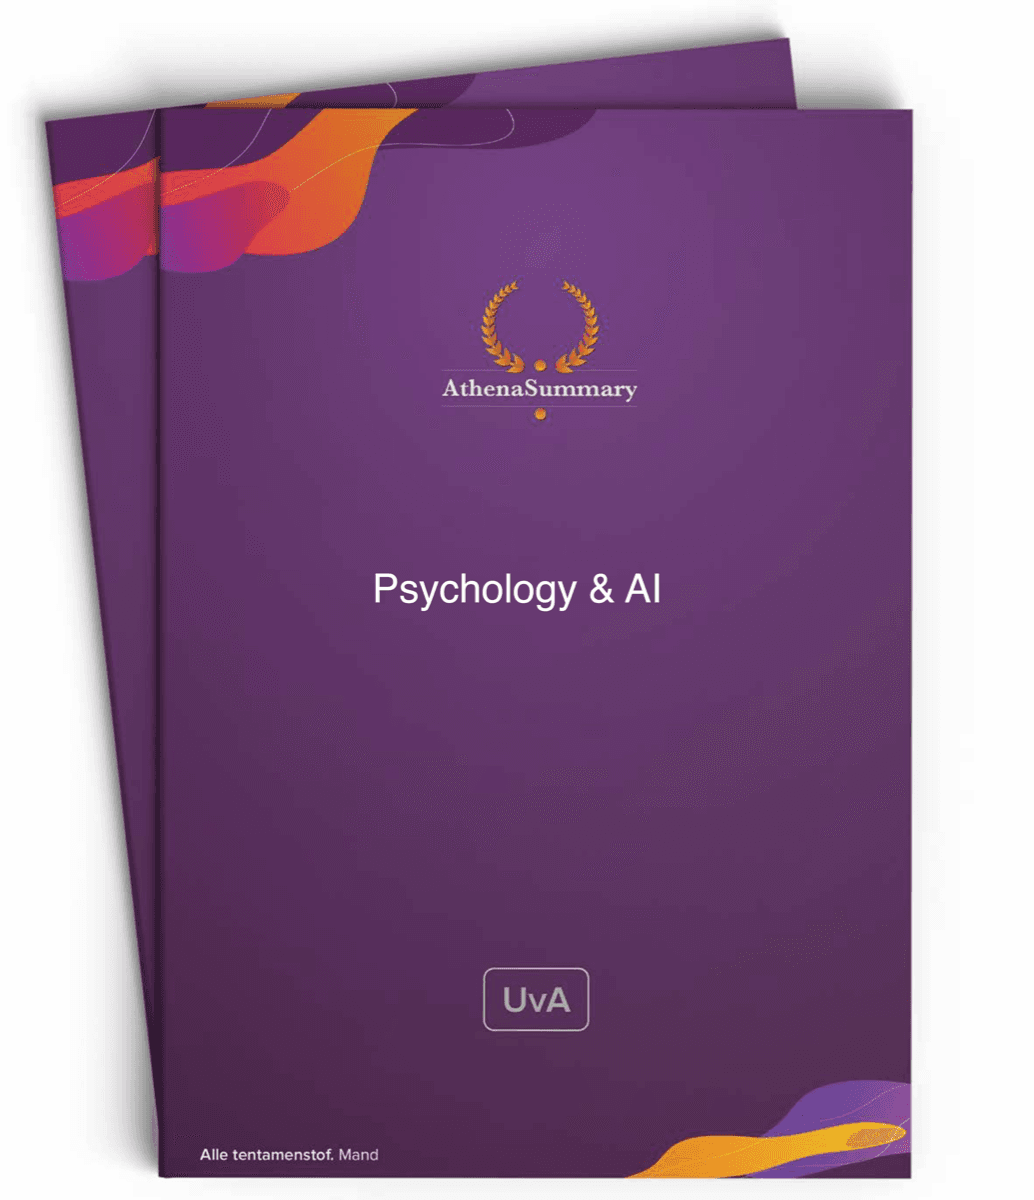 Literature Summary: Psychology & AI